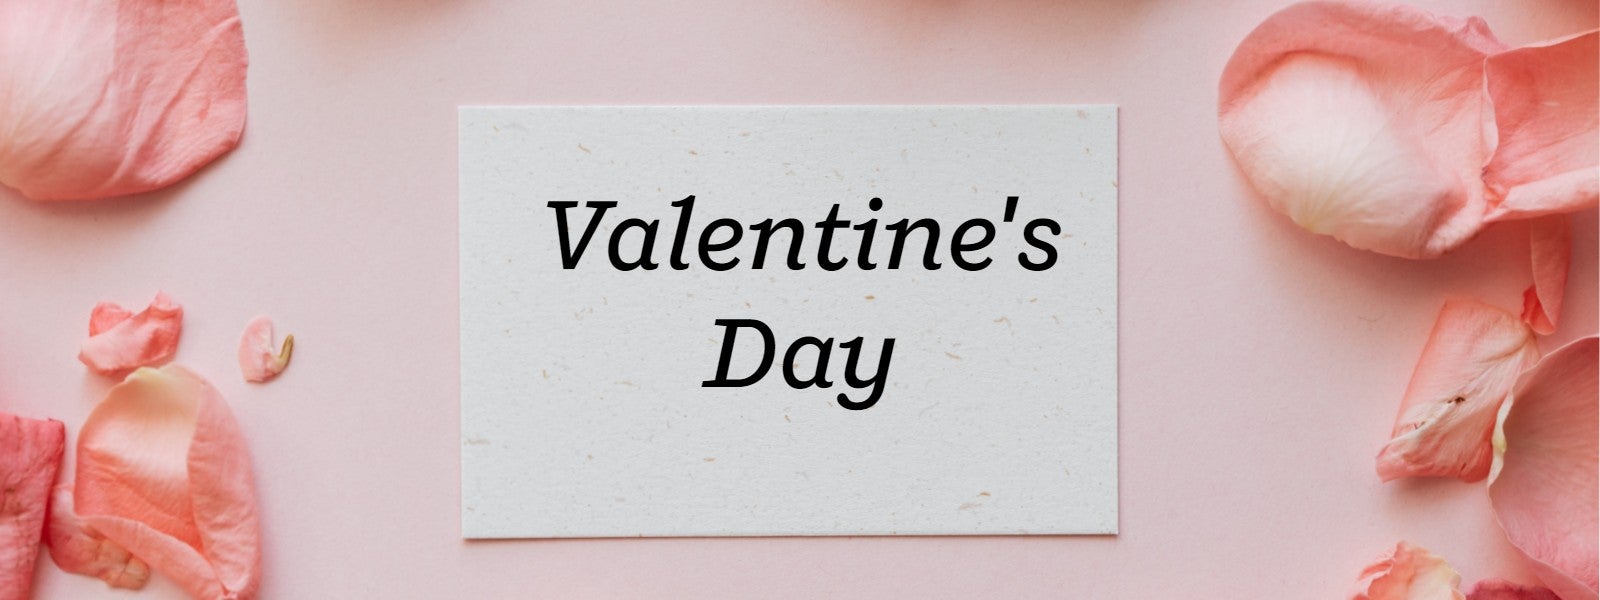 How Do You Celebrate Valentine’s Day?